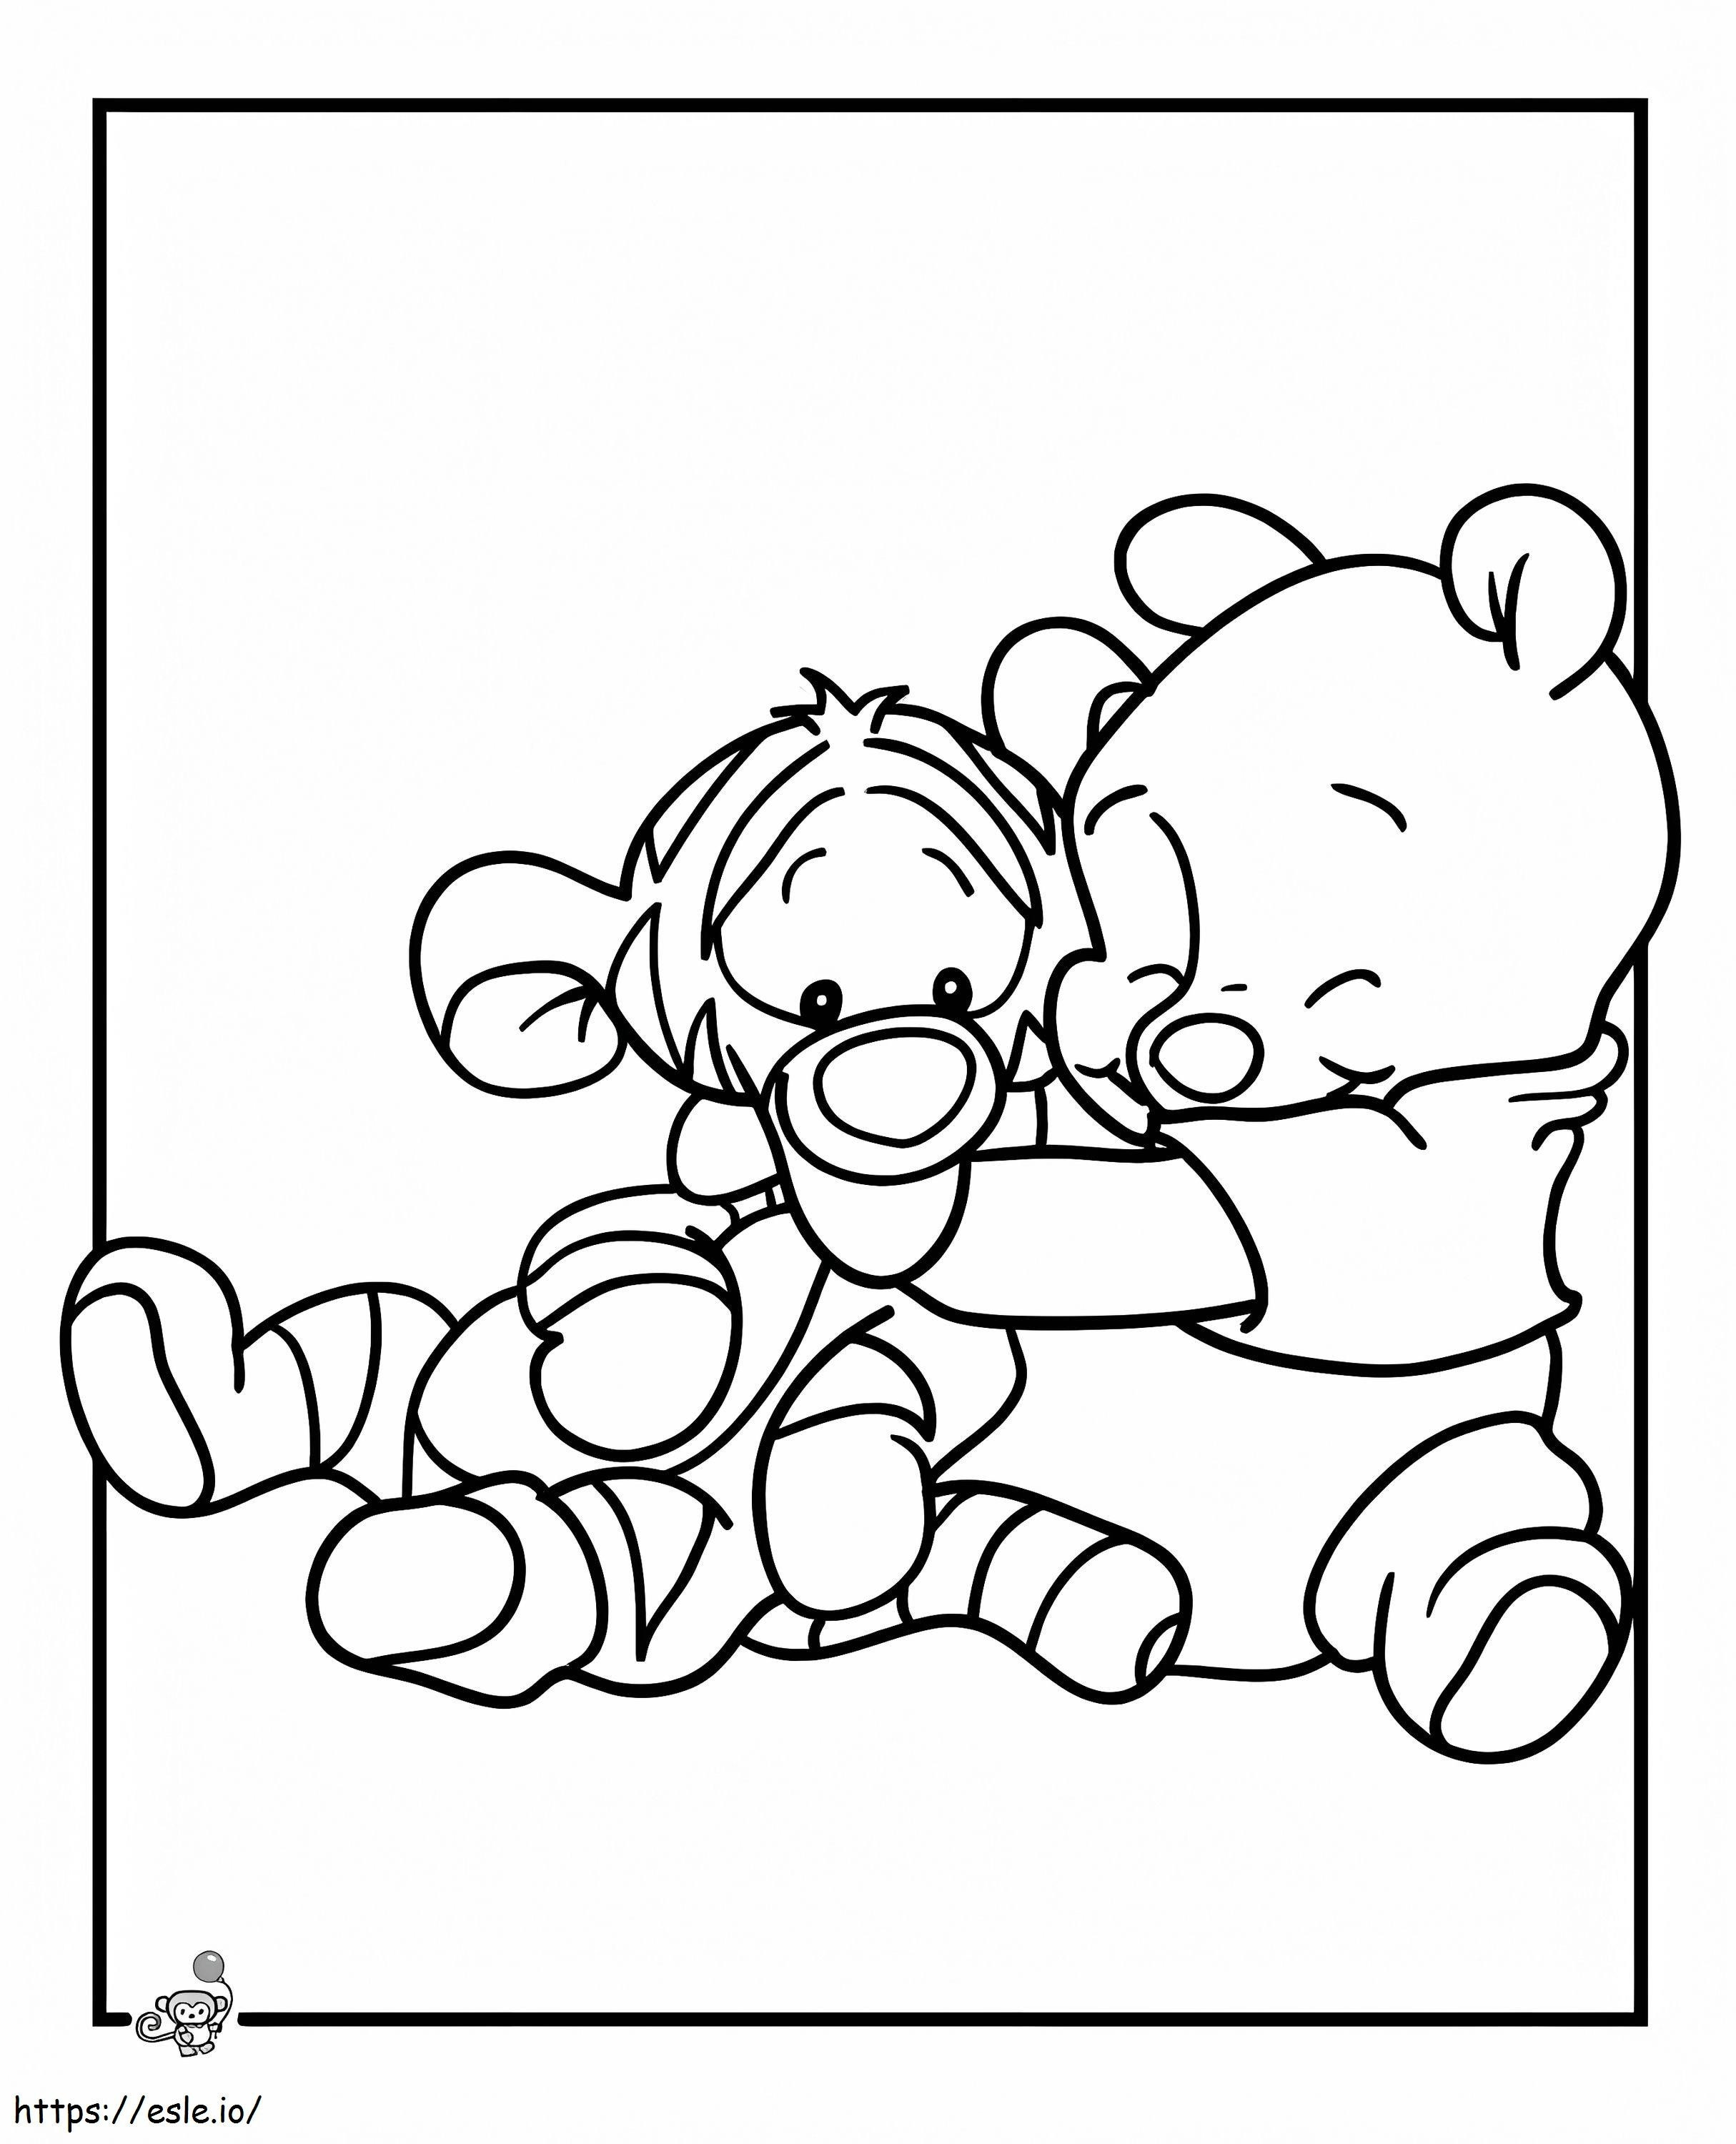 Baby Pooh And Tigger coloring page